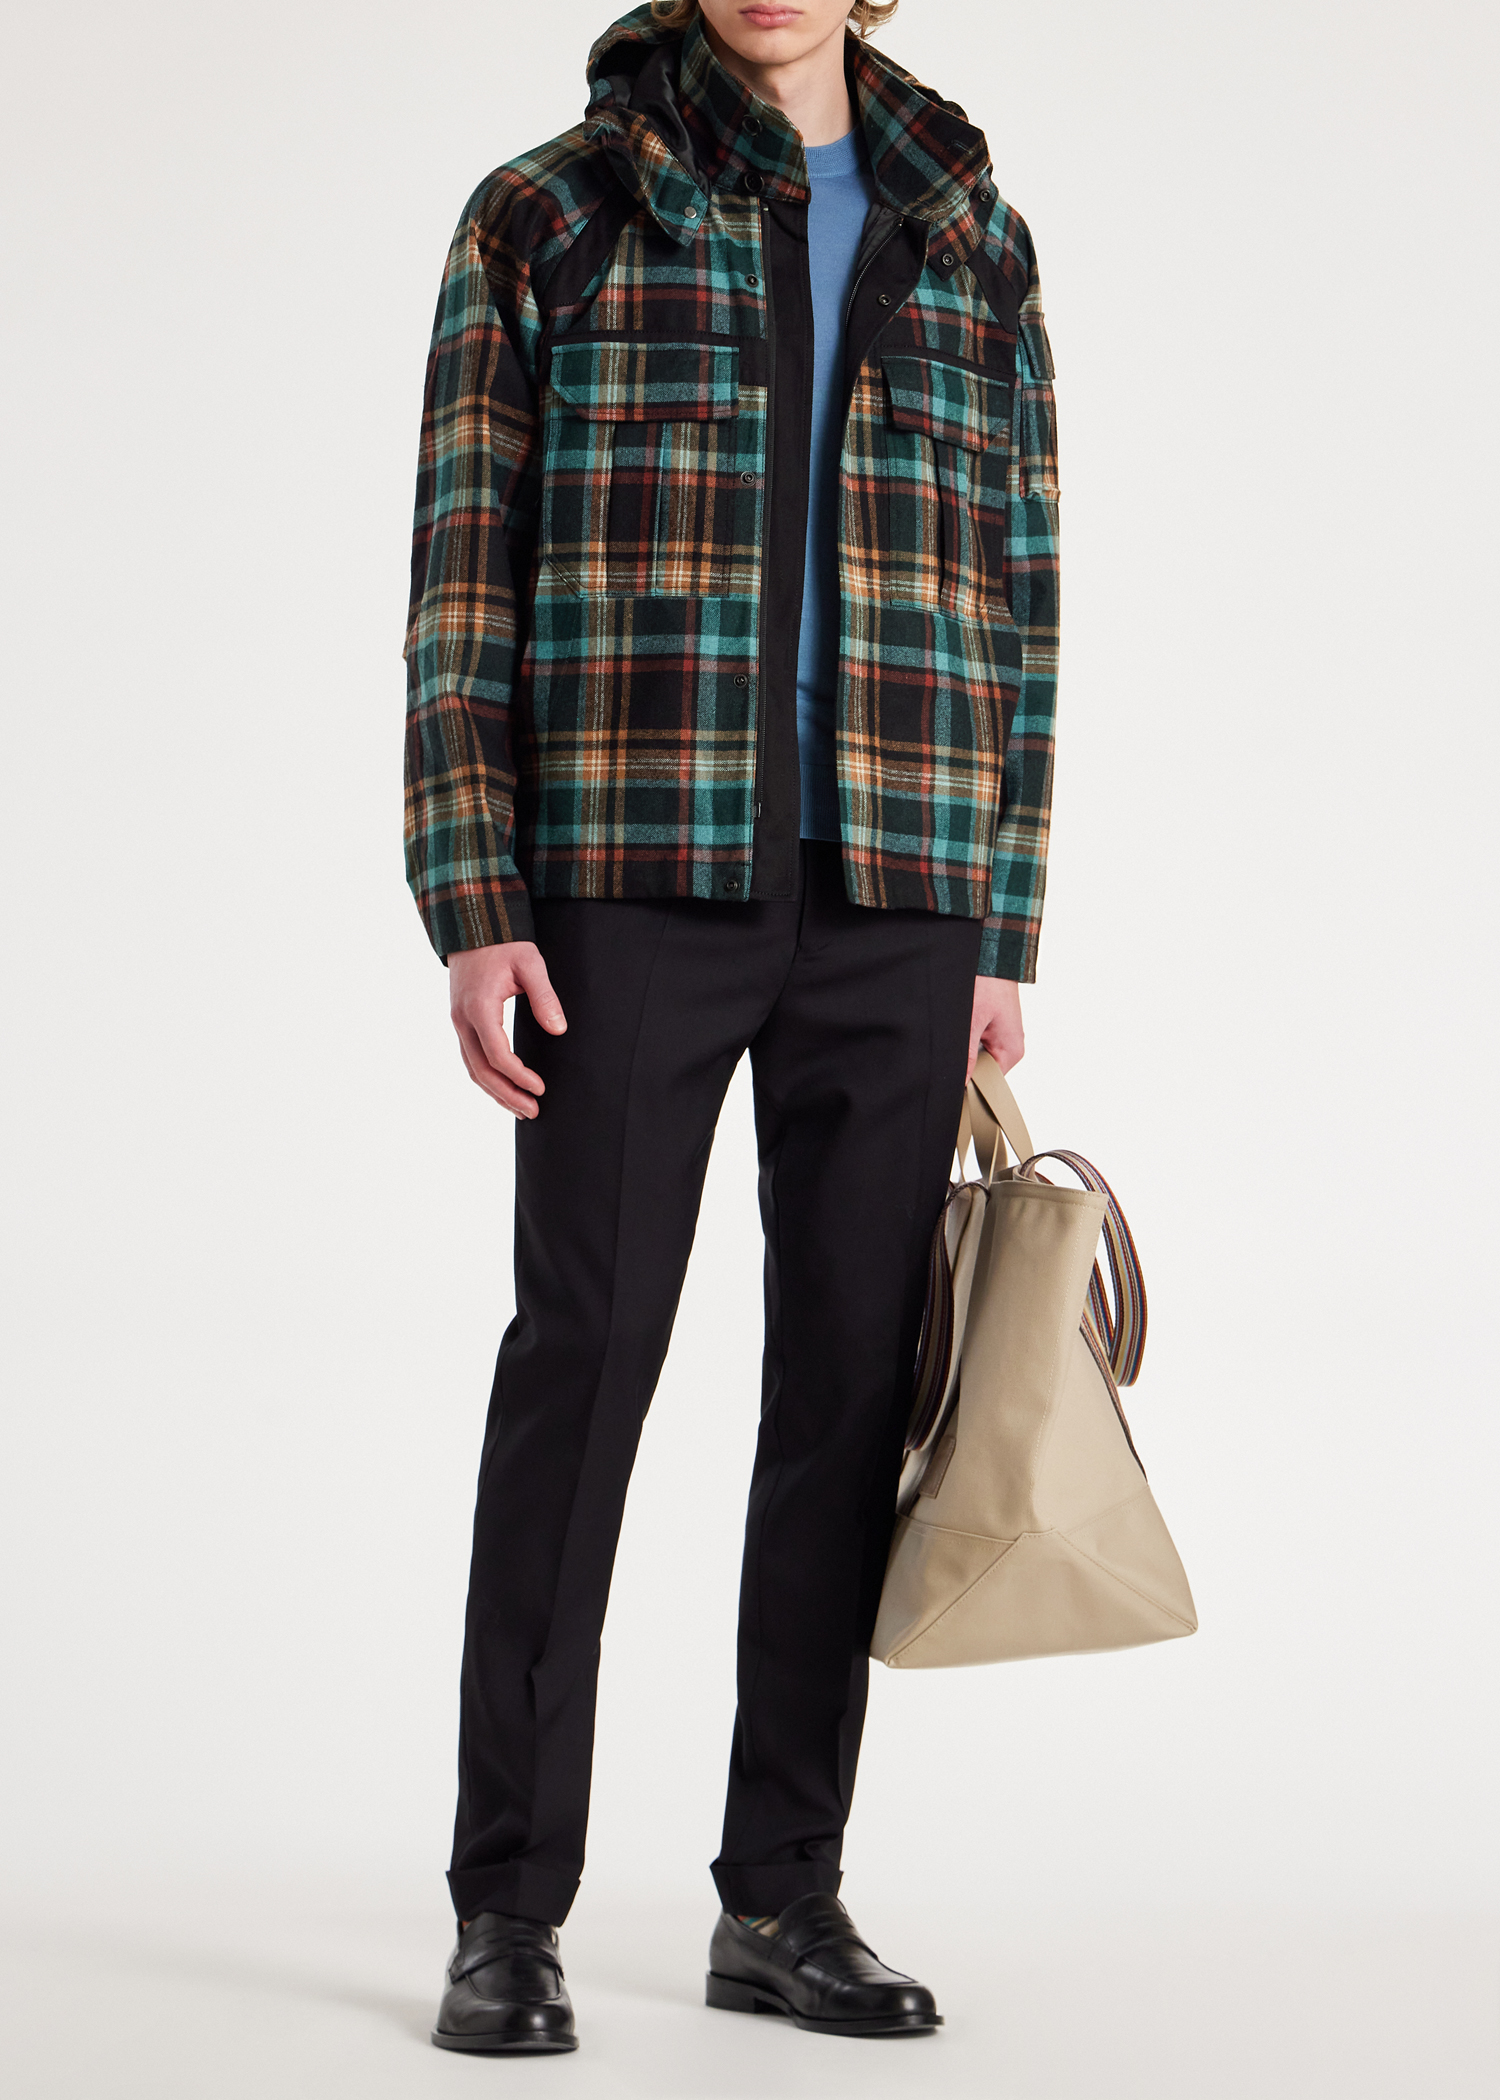 Designer Coats & Jackets for Men | Paul Smith